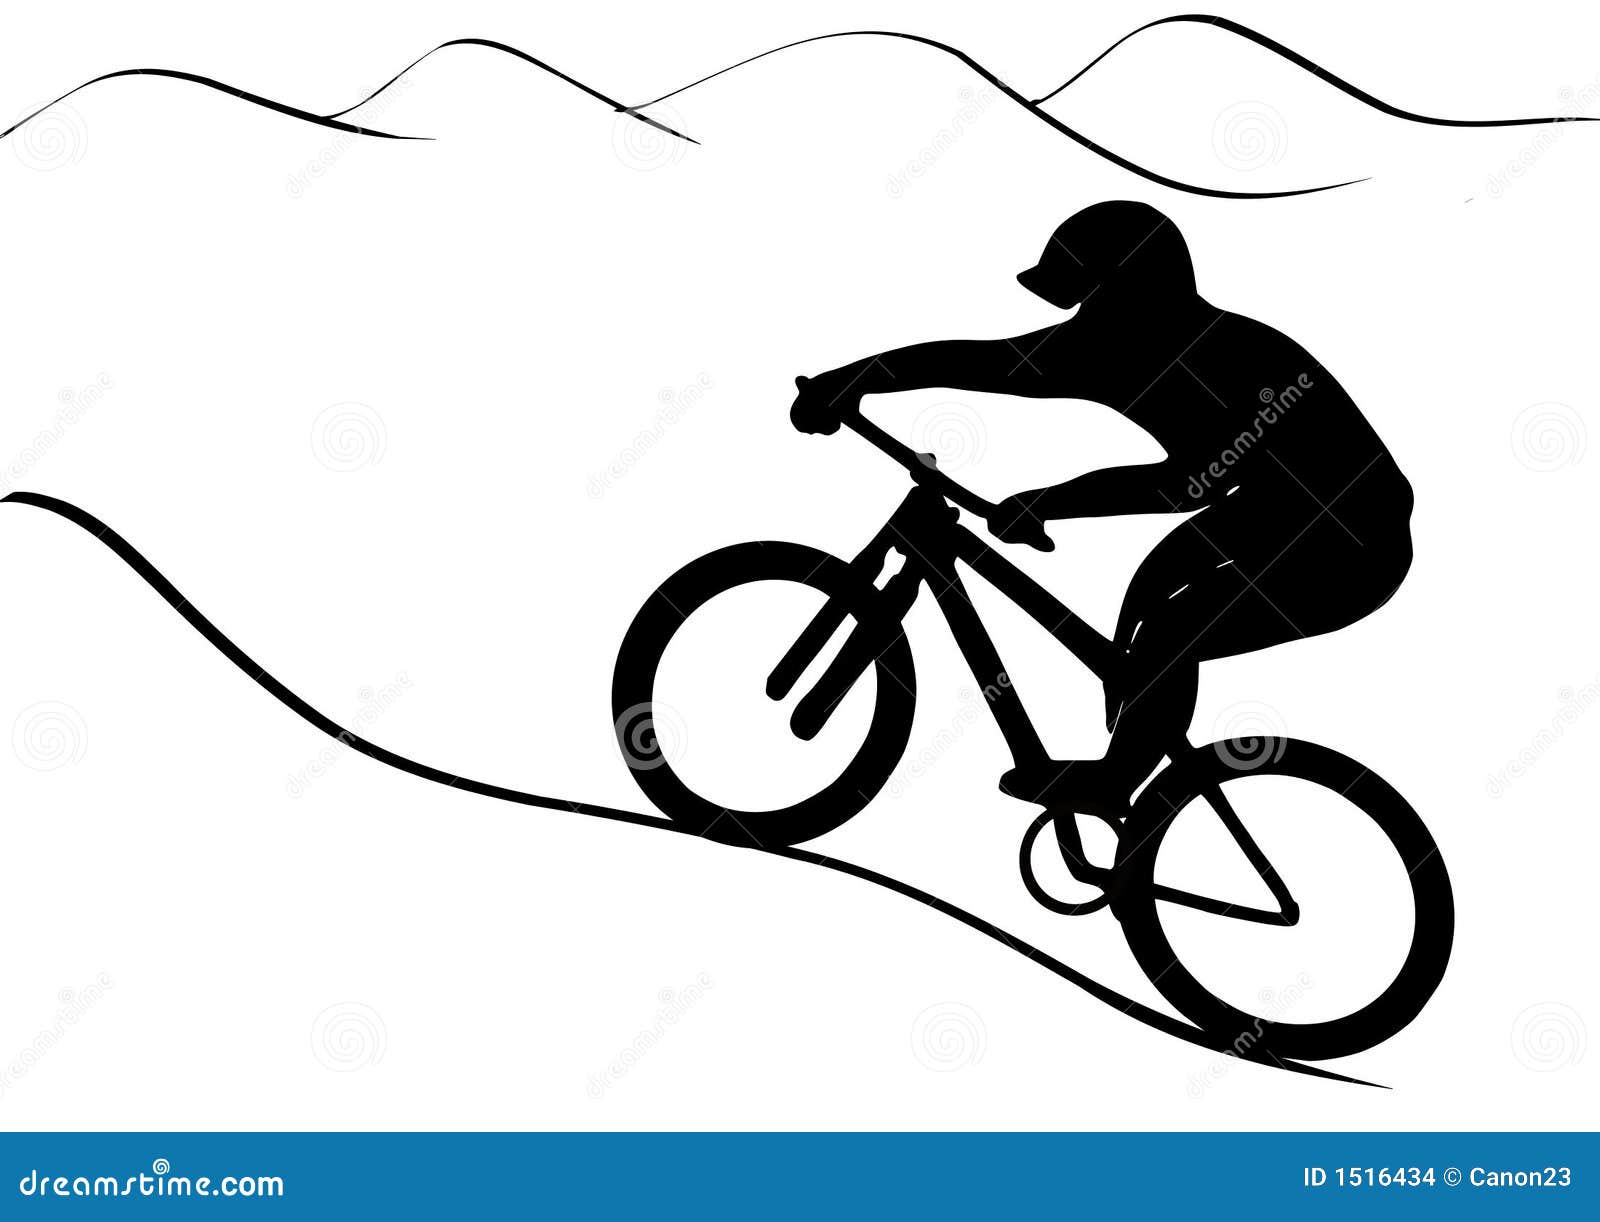 clip art bmx bike rider - photo #46